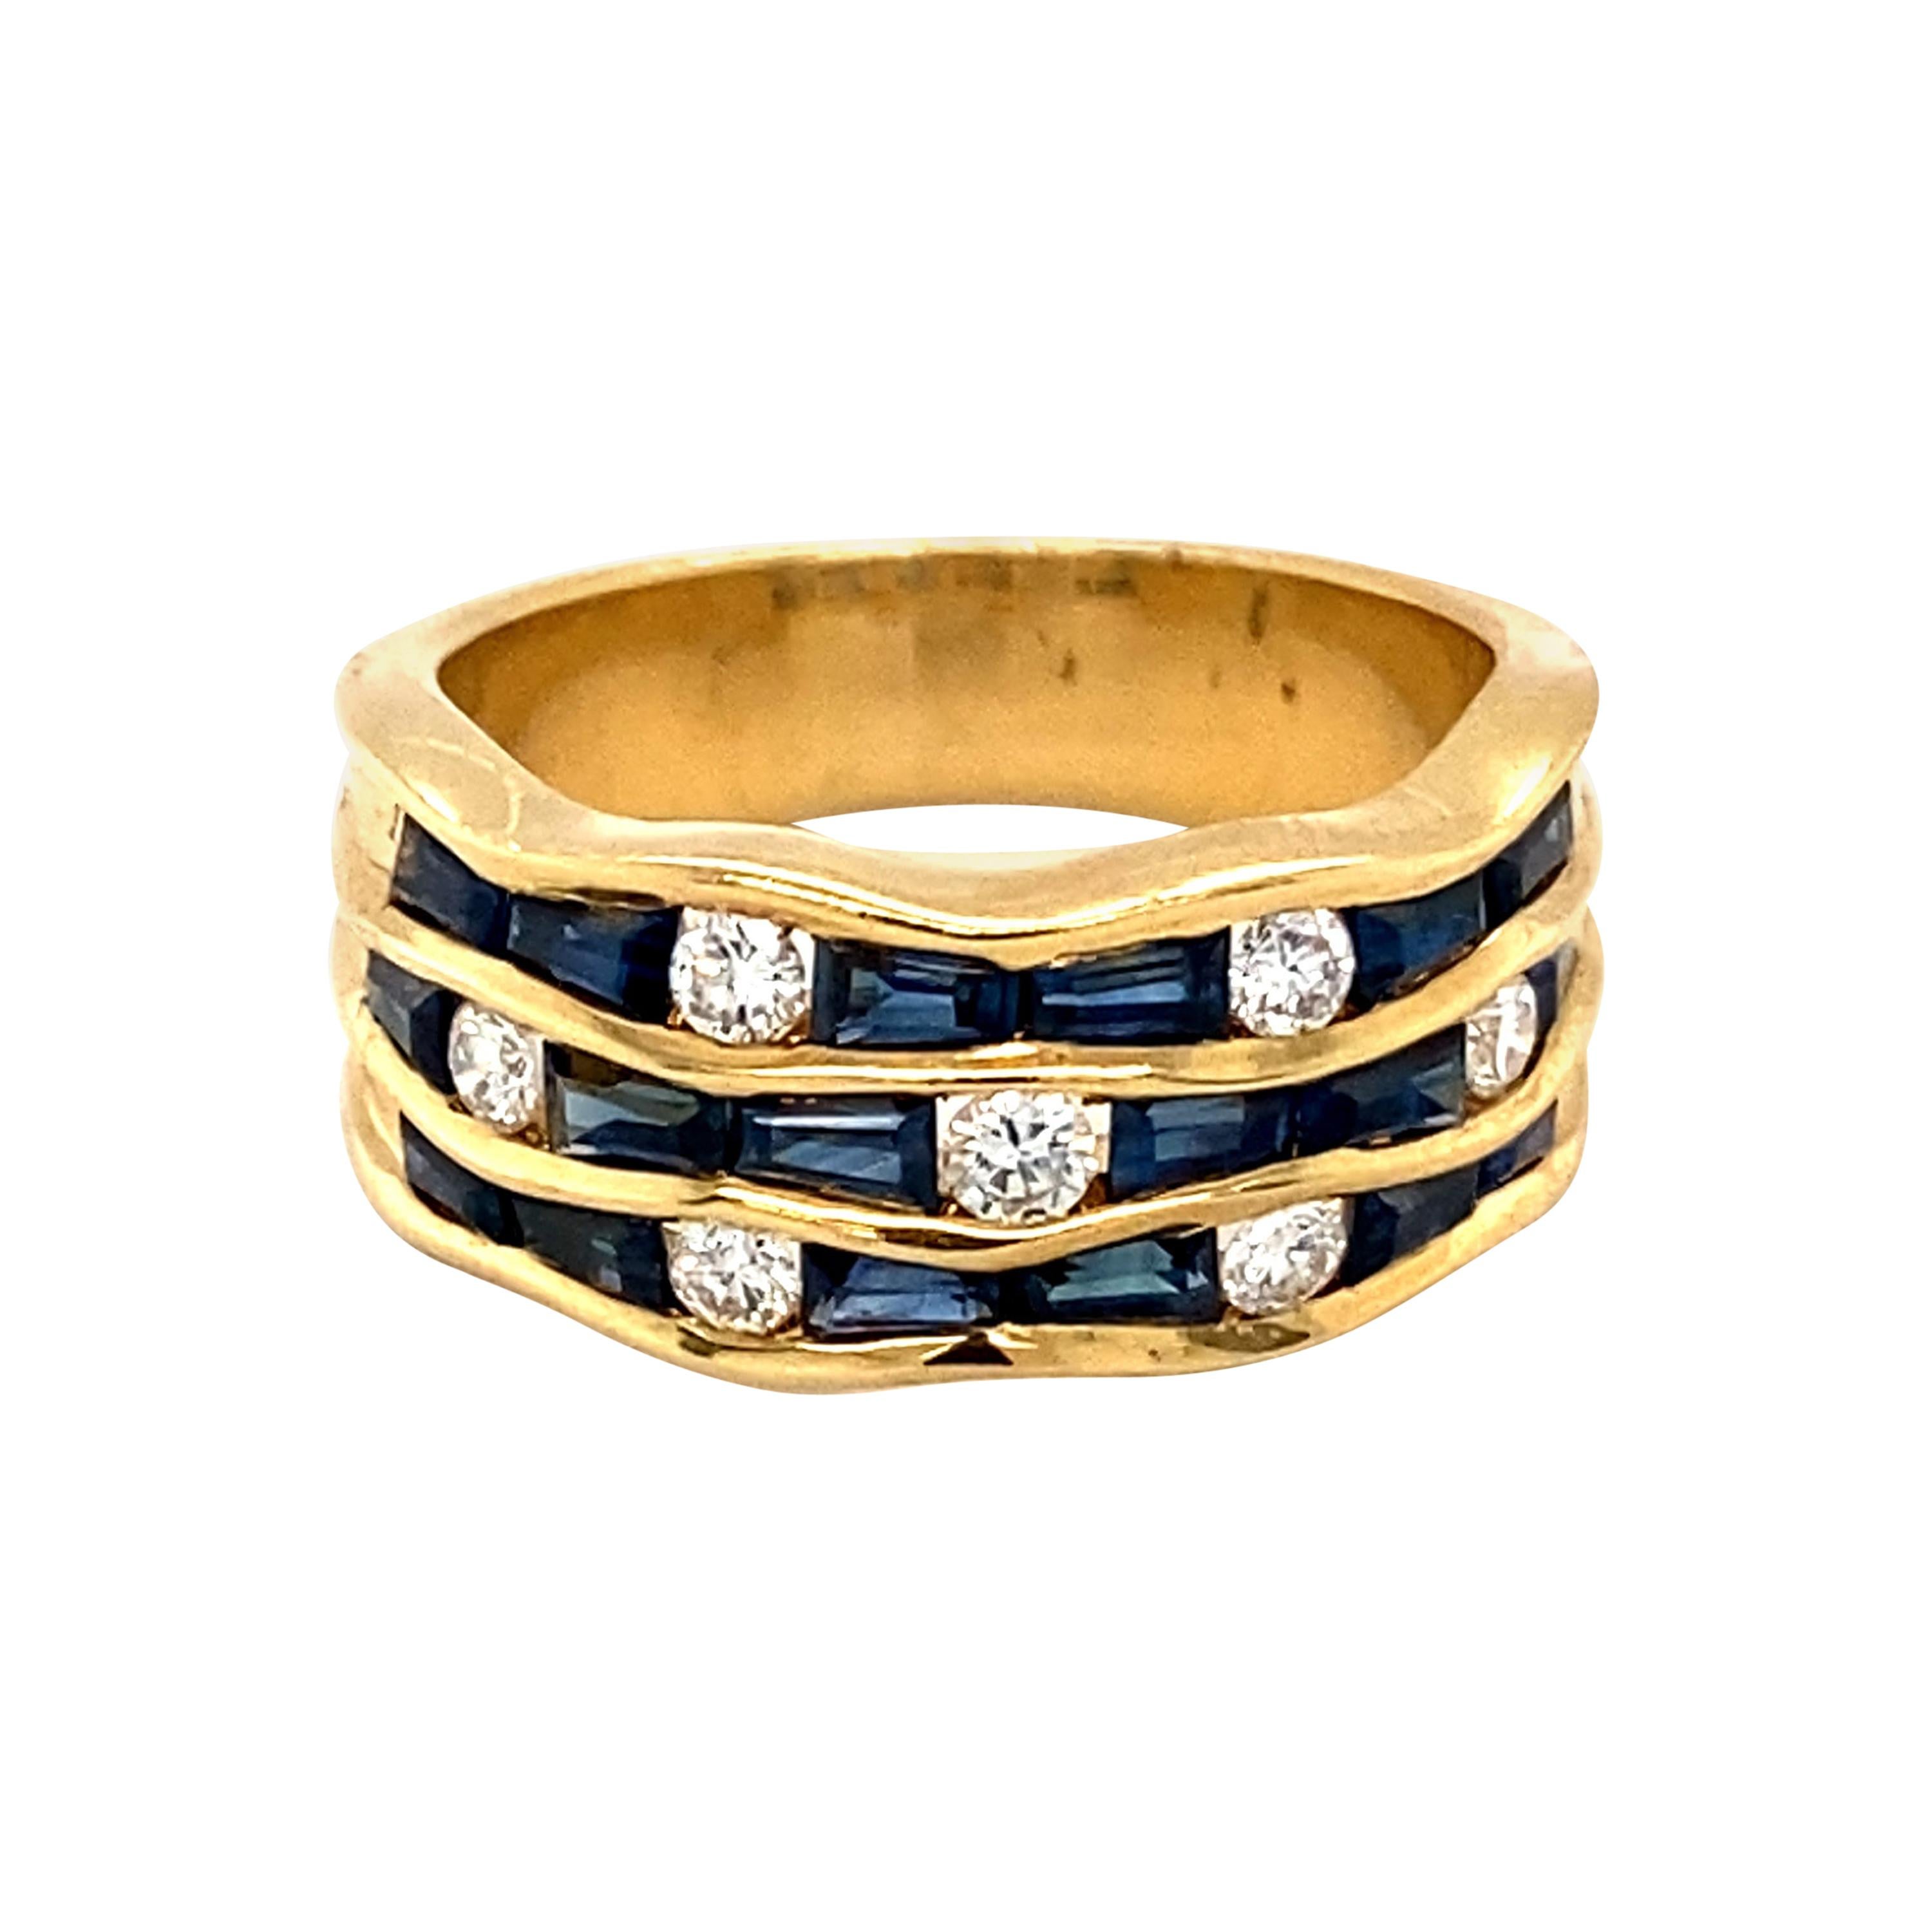 1 Carat Sapphire and 0.40 Carat Diamond Ring in 18 Karat Yellow Gold